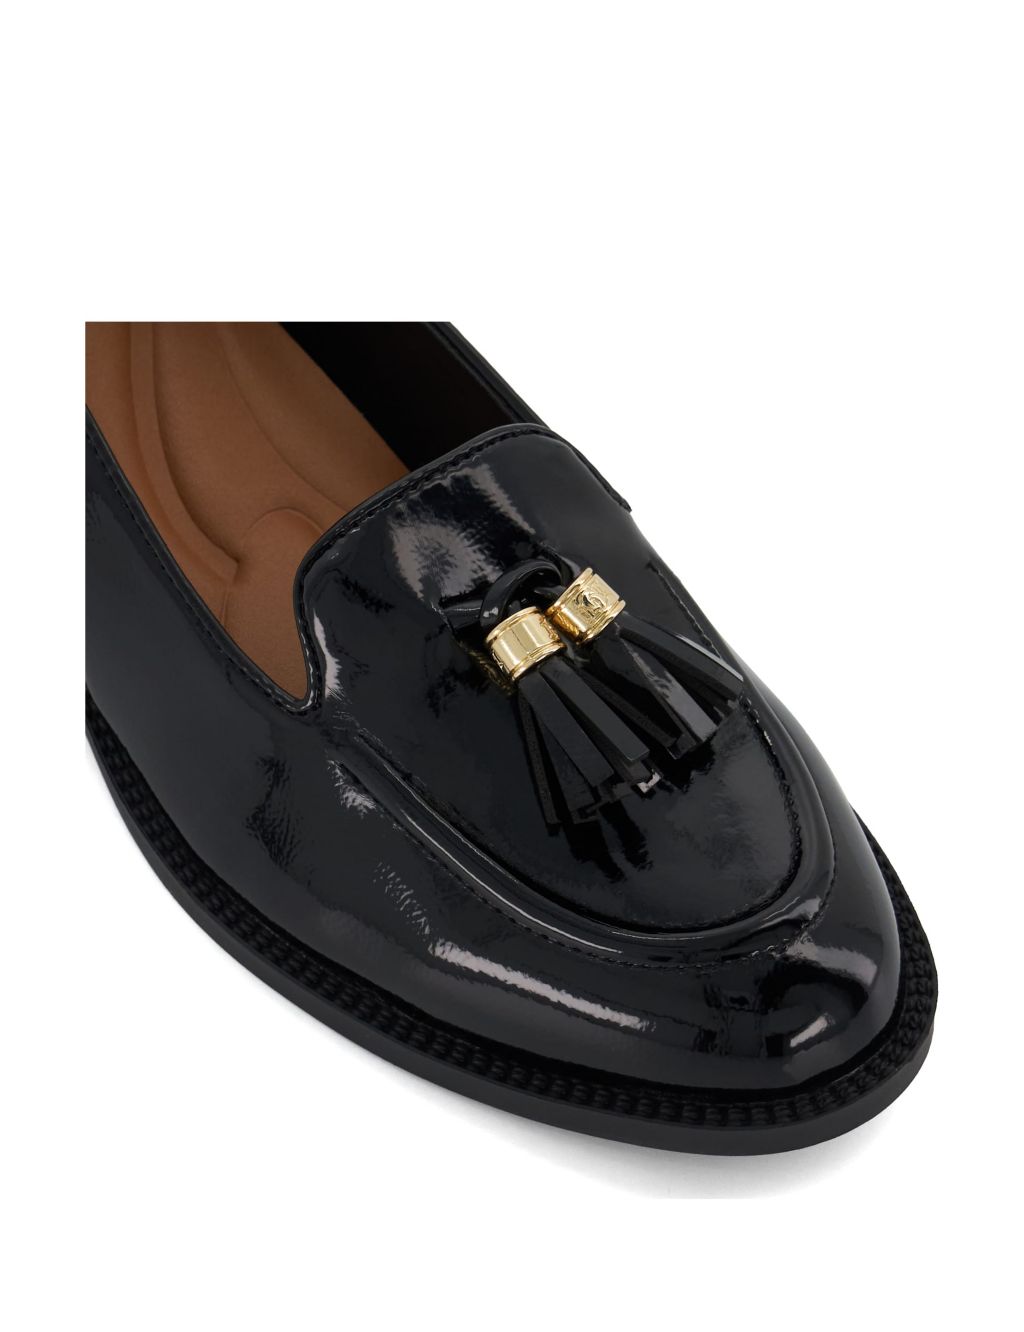 Leather Tassel Flat Loafers | Dune London | M&S